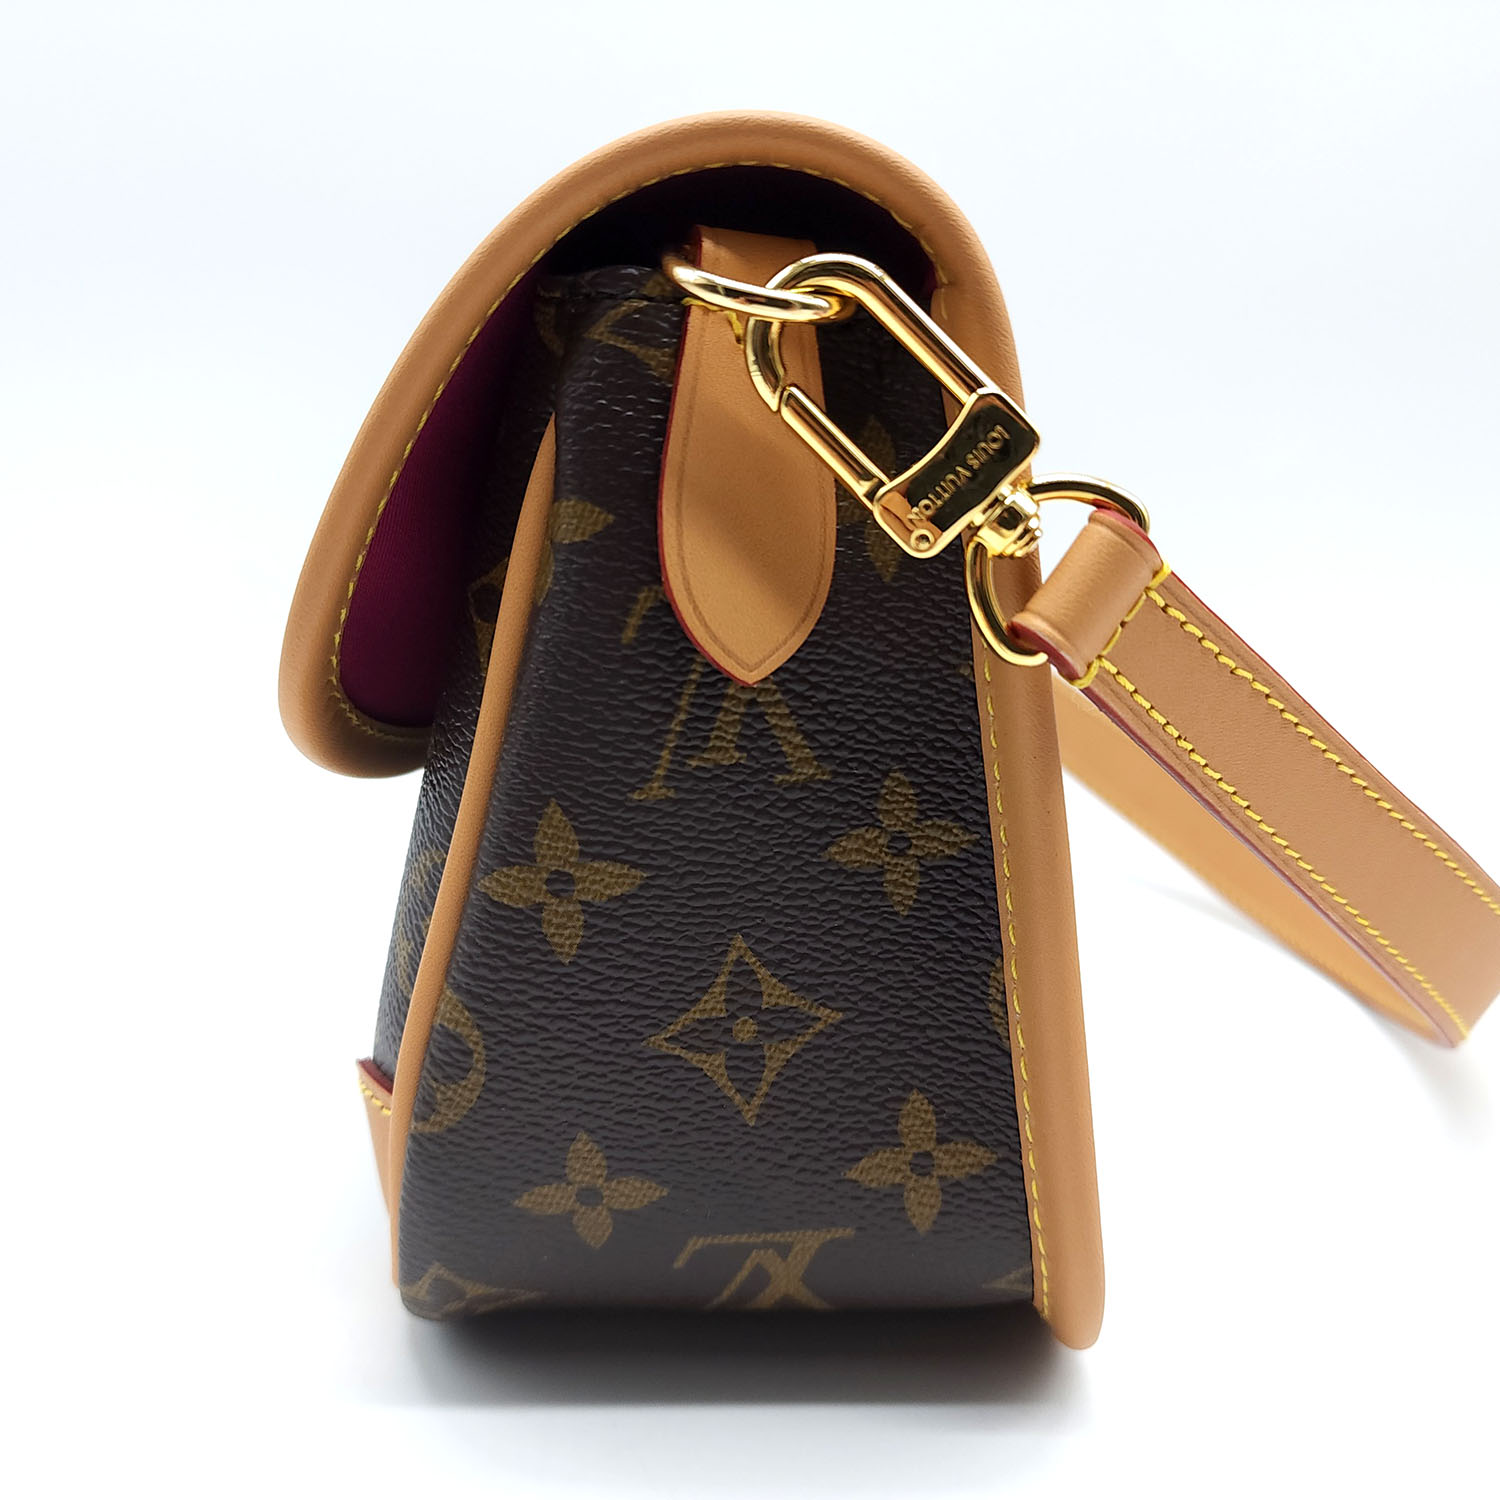 Louis Vuitton - Diane Satchel - Monogram Canvas - Fuchsia - Women - Handbag - Luxury